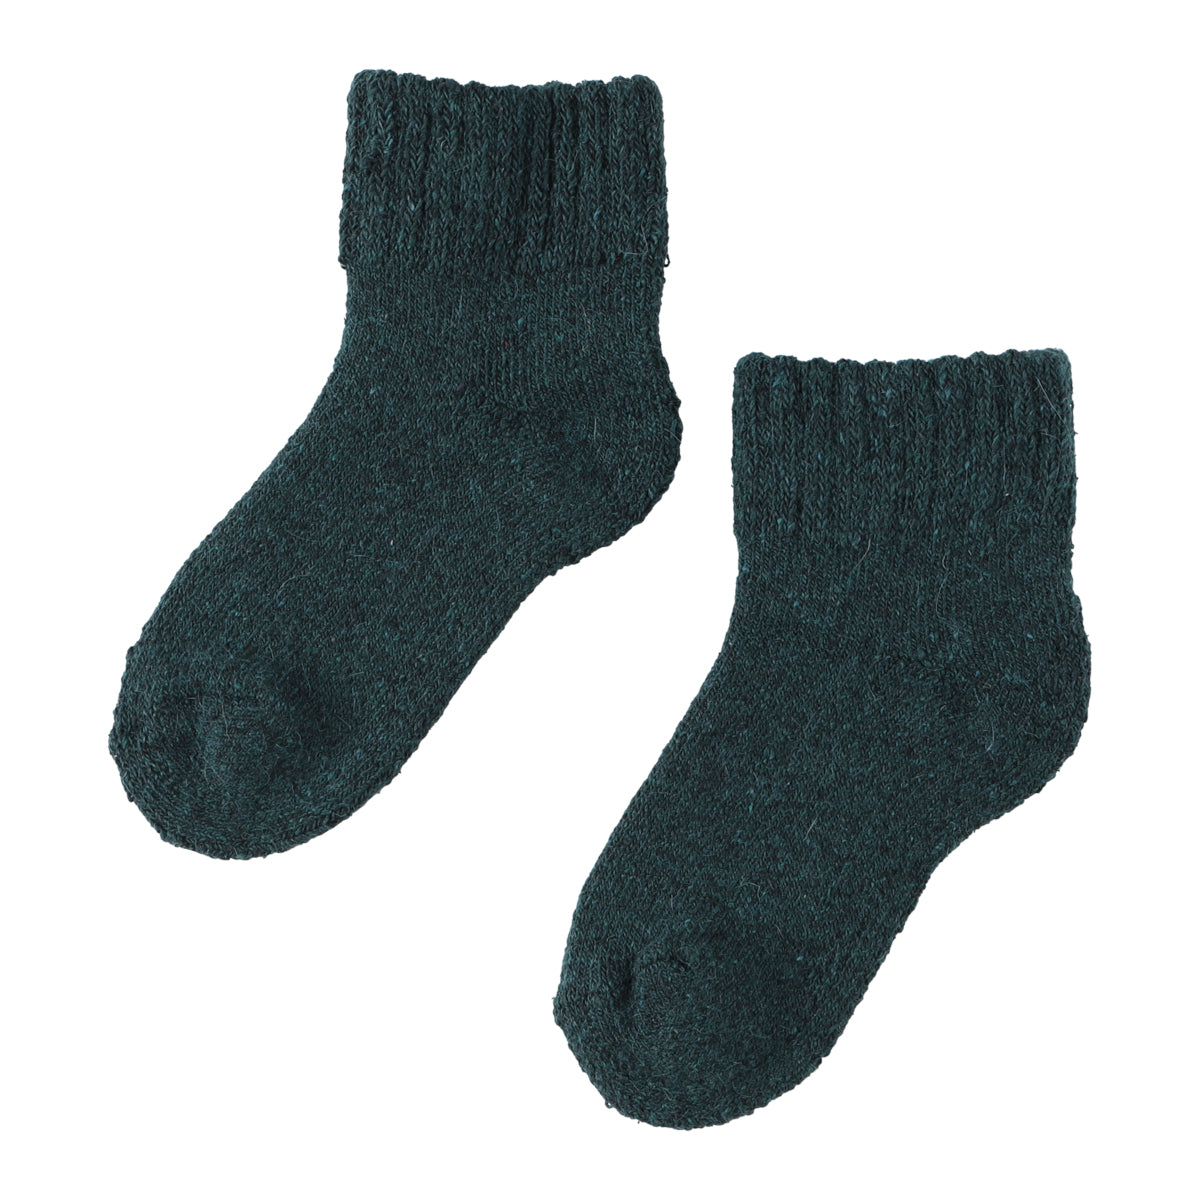 Silk and Angola mixed socks (MOSS)